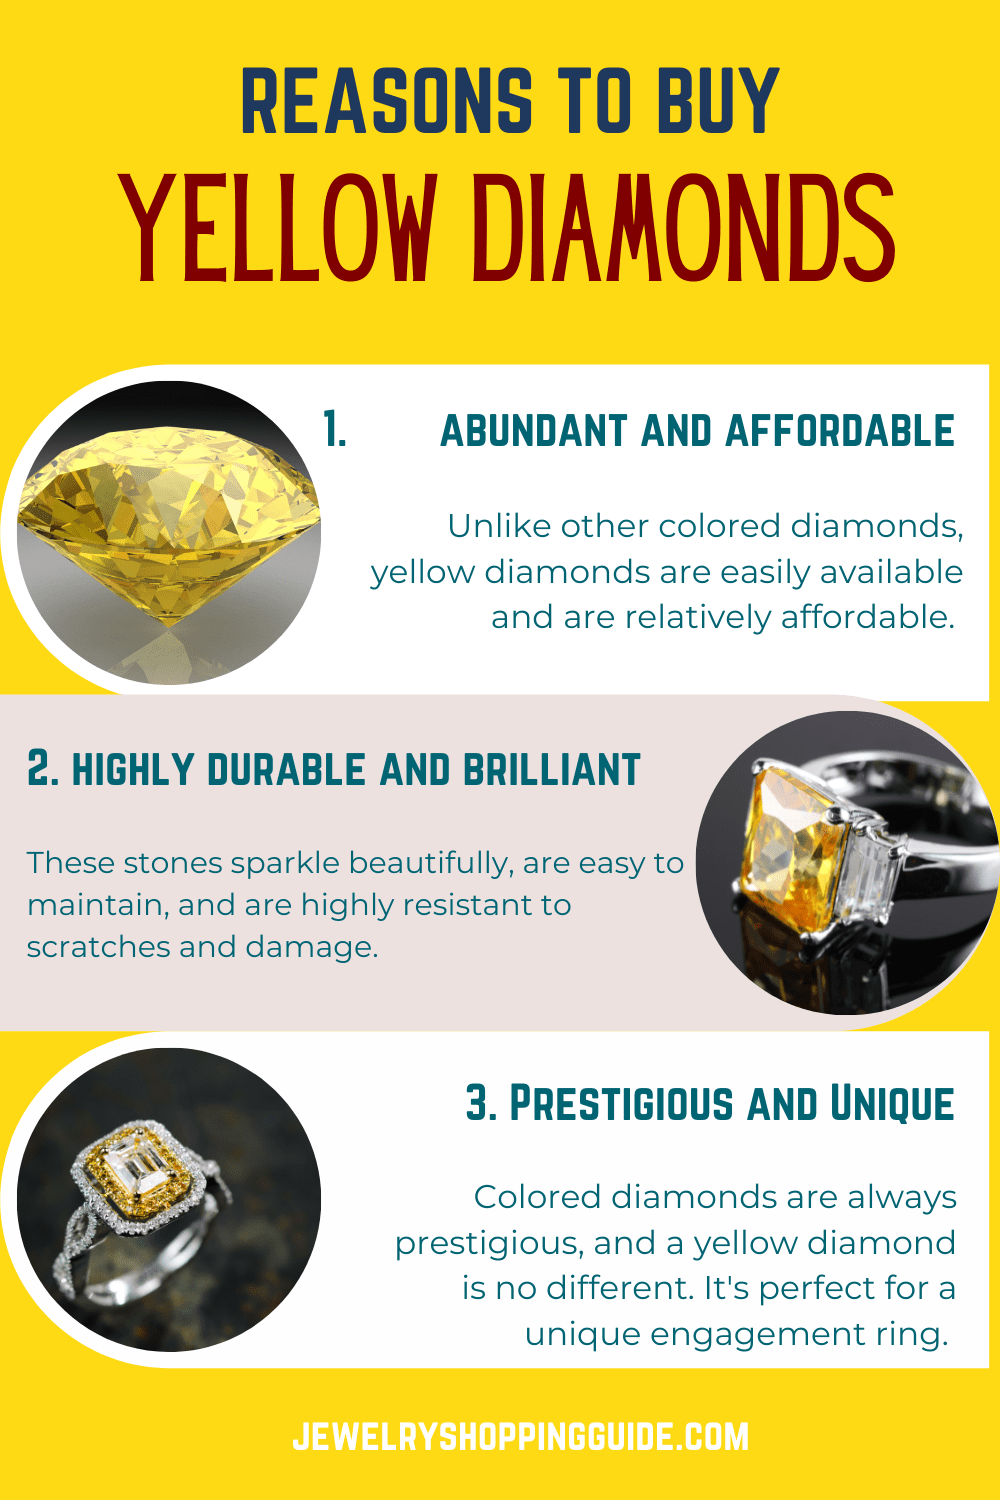 Reasons to buy yellow diamonds